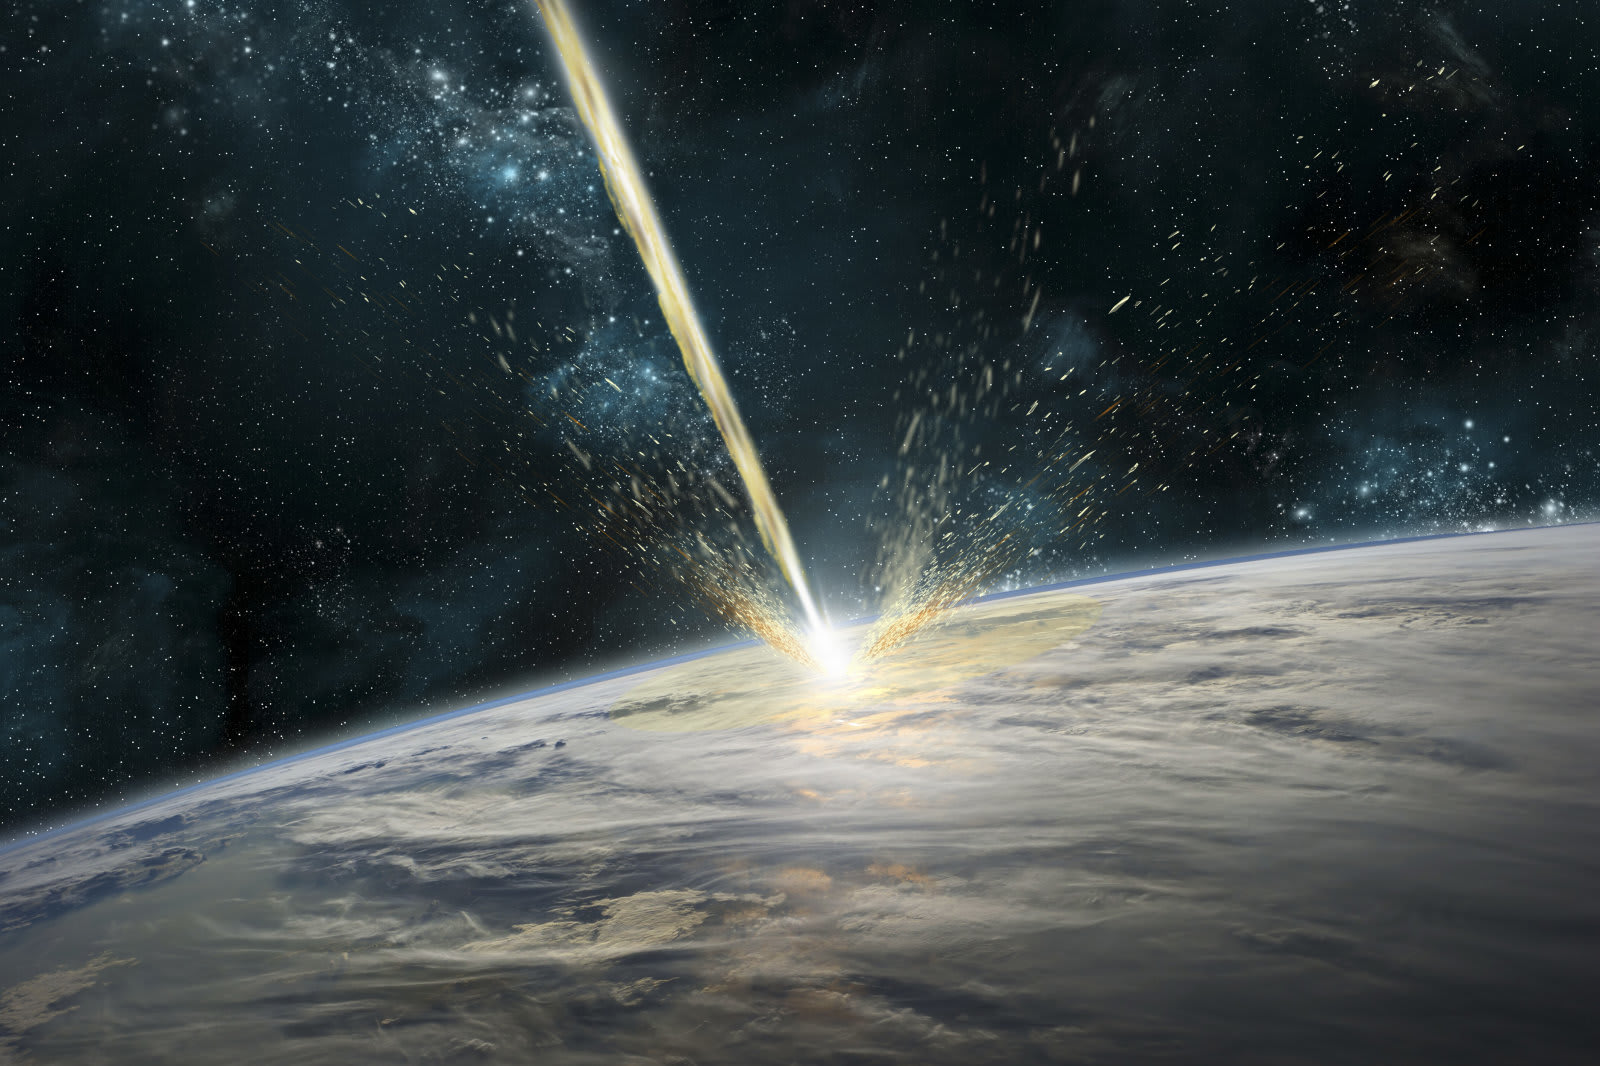 Esaとnasa 小惑星から地球を防衛するための会合を来週ローマで開催 Engadget 日本版